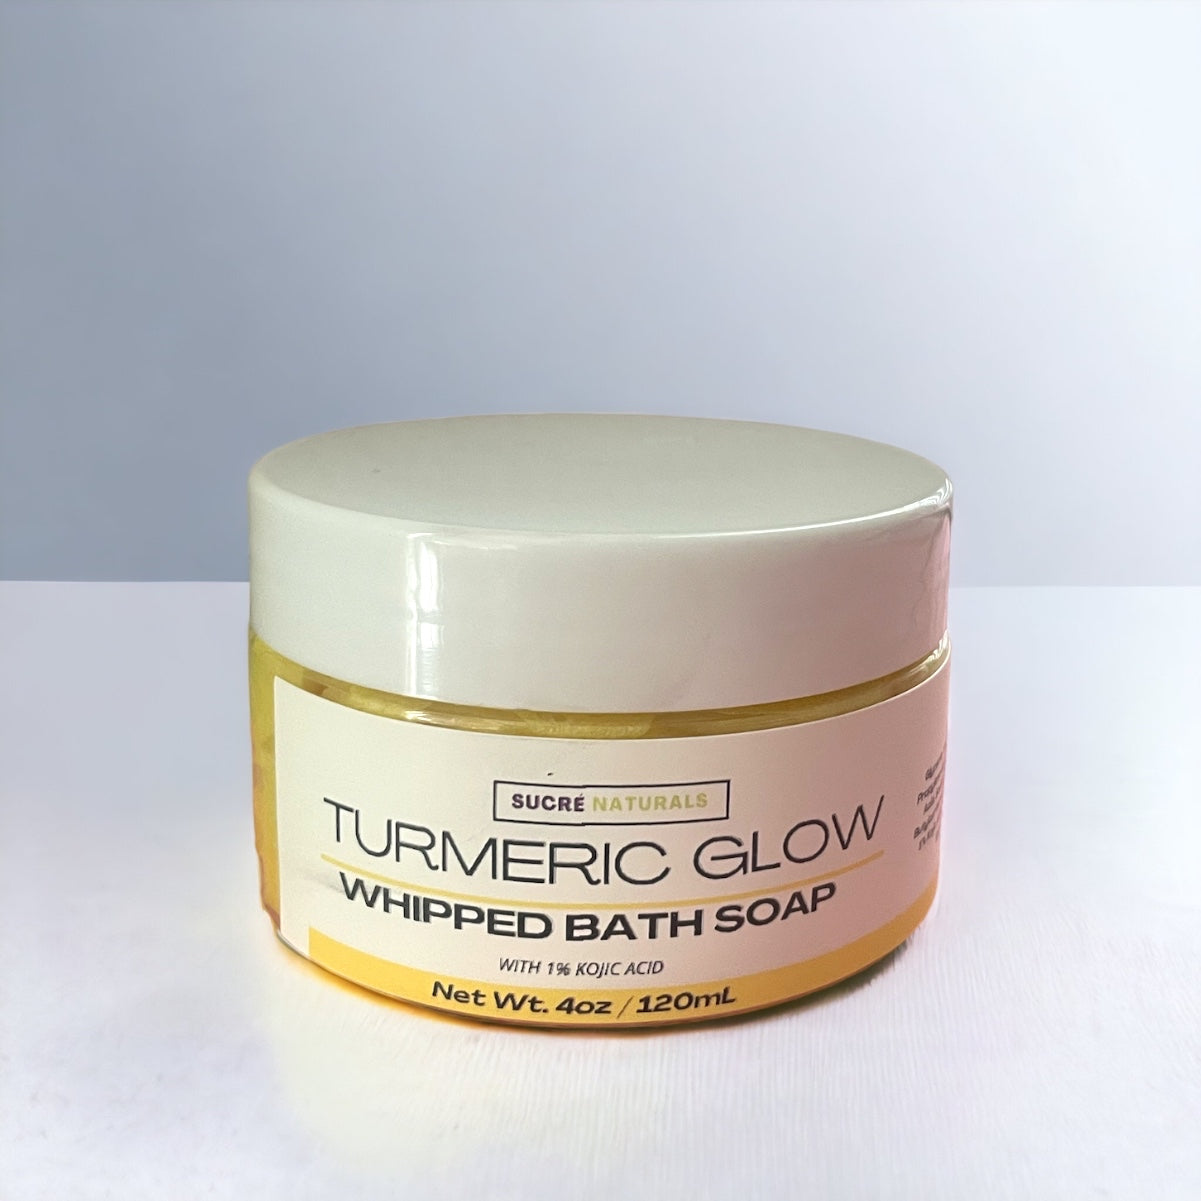 Turmeric Glow Whipped Bath Soap